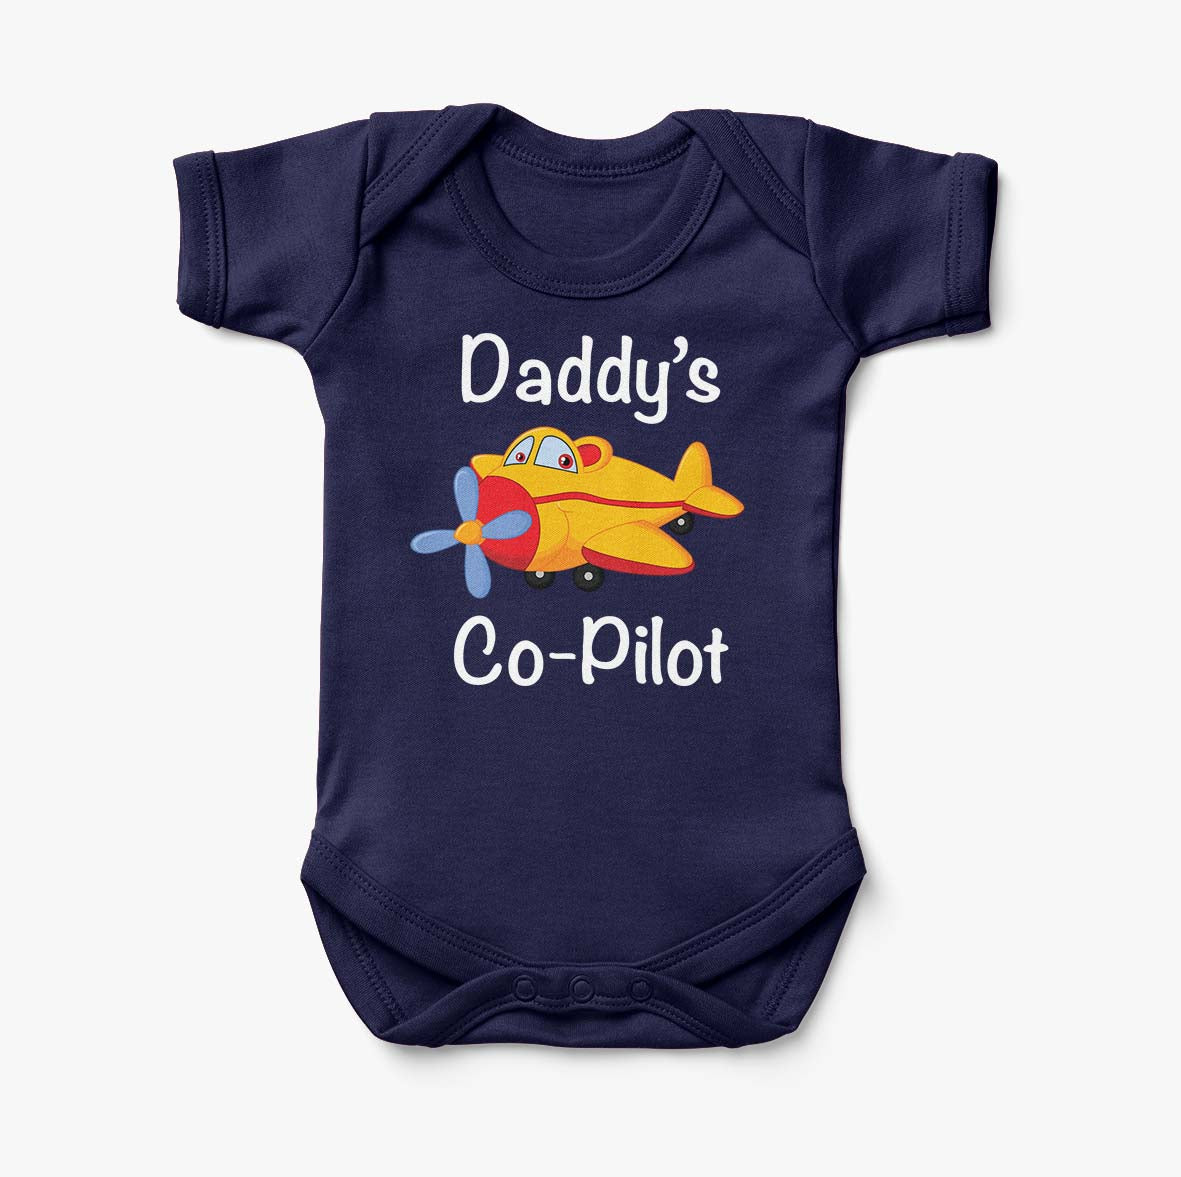 Daddy's Co-Pilot (Propeller) Designed Baby Bodysuits